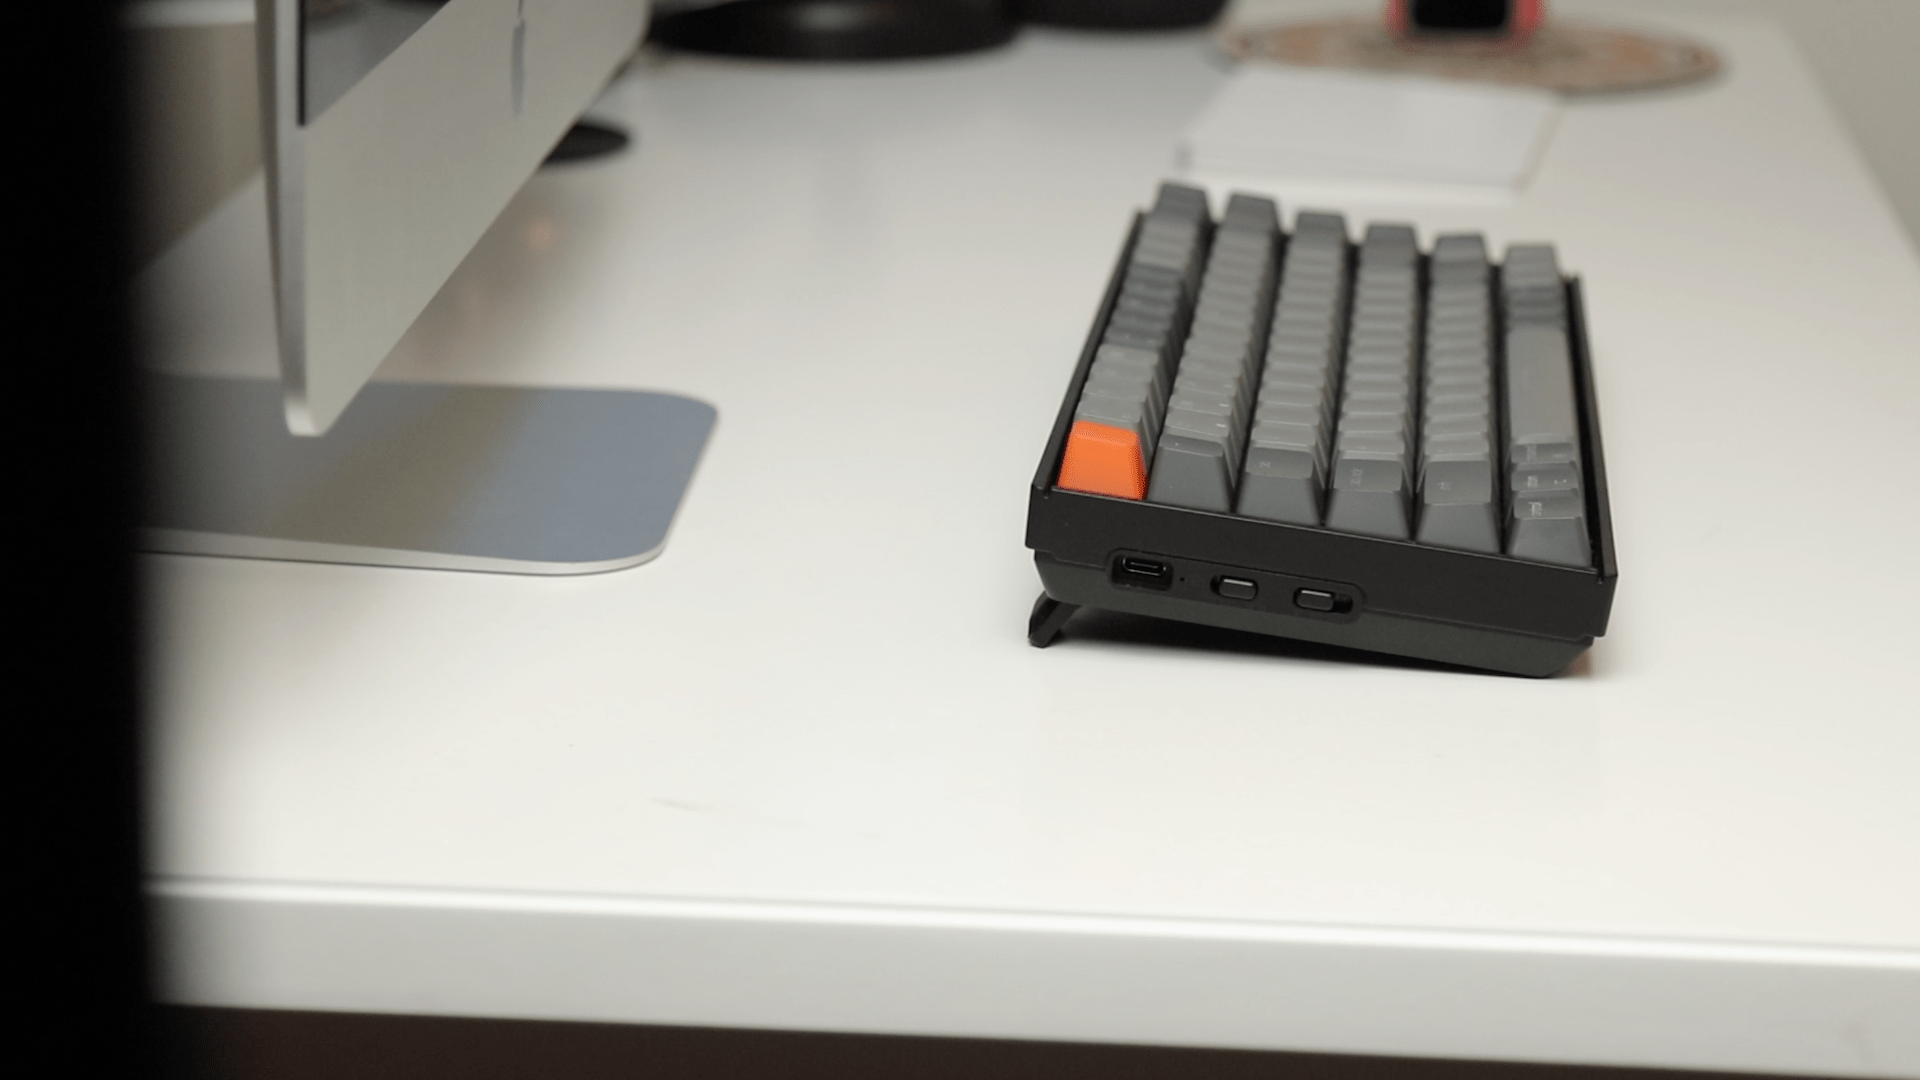 The Keychron K2 mechanical keyboard on a desk